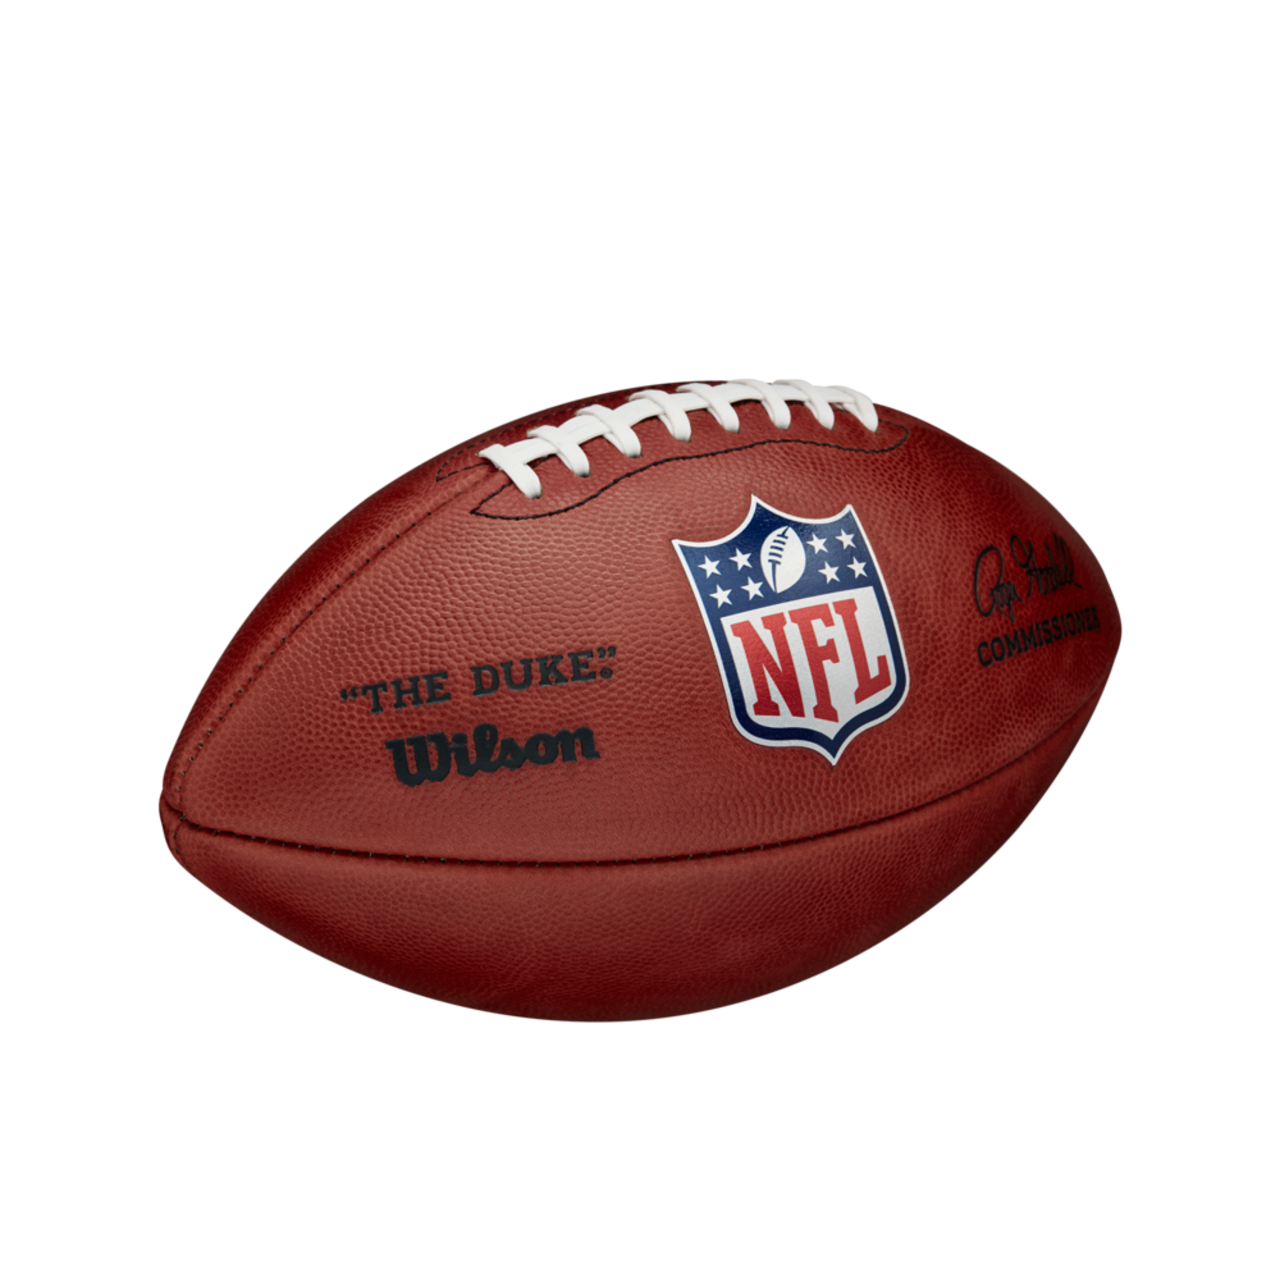 Ballon de football en caoutchouc imperméable Wilson LCF MVP, taille  officielle, brun